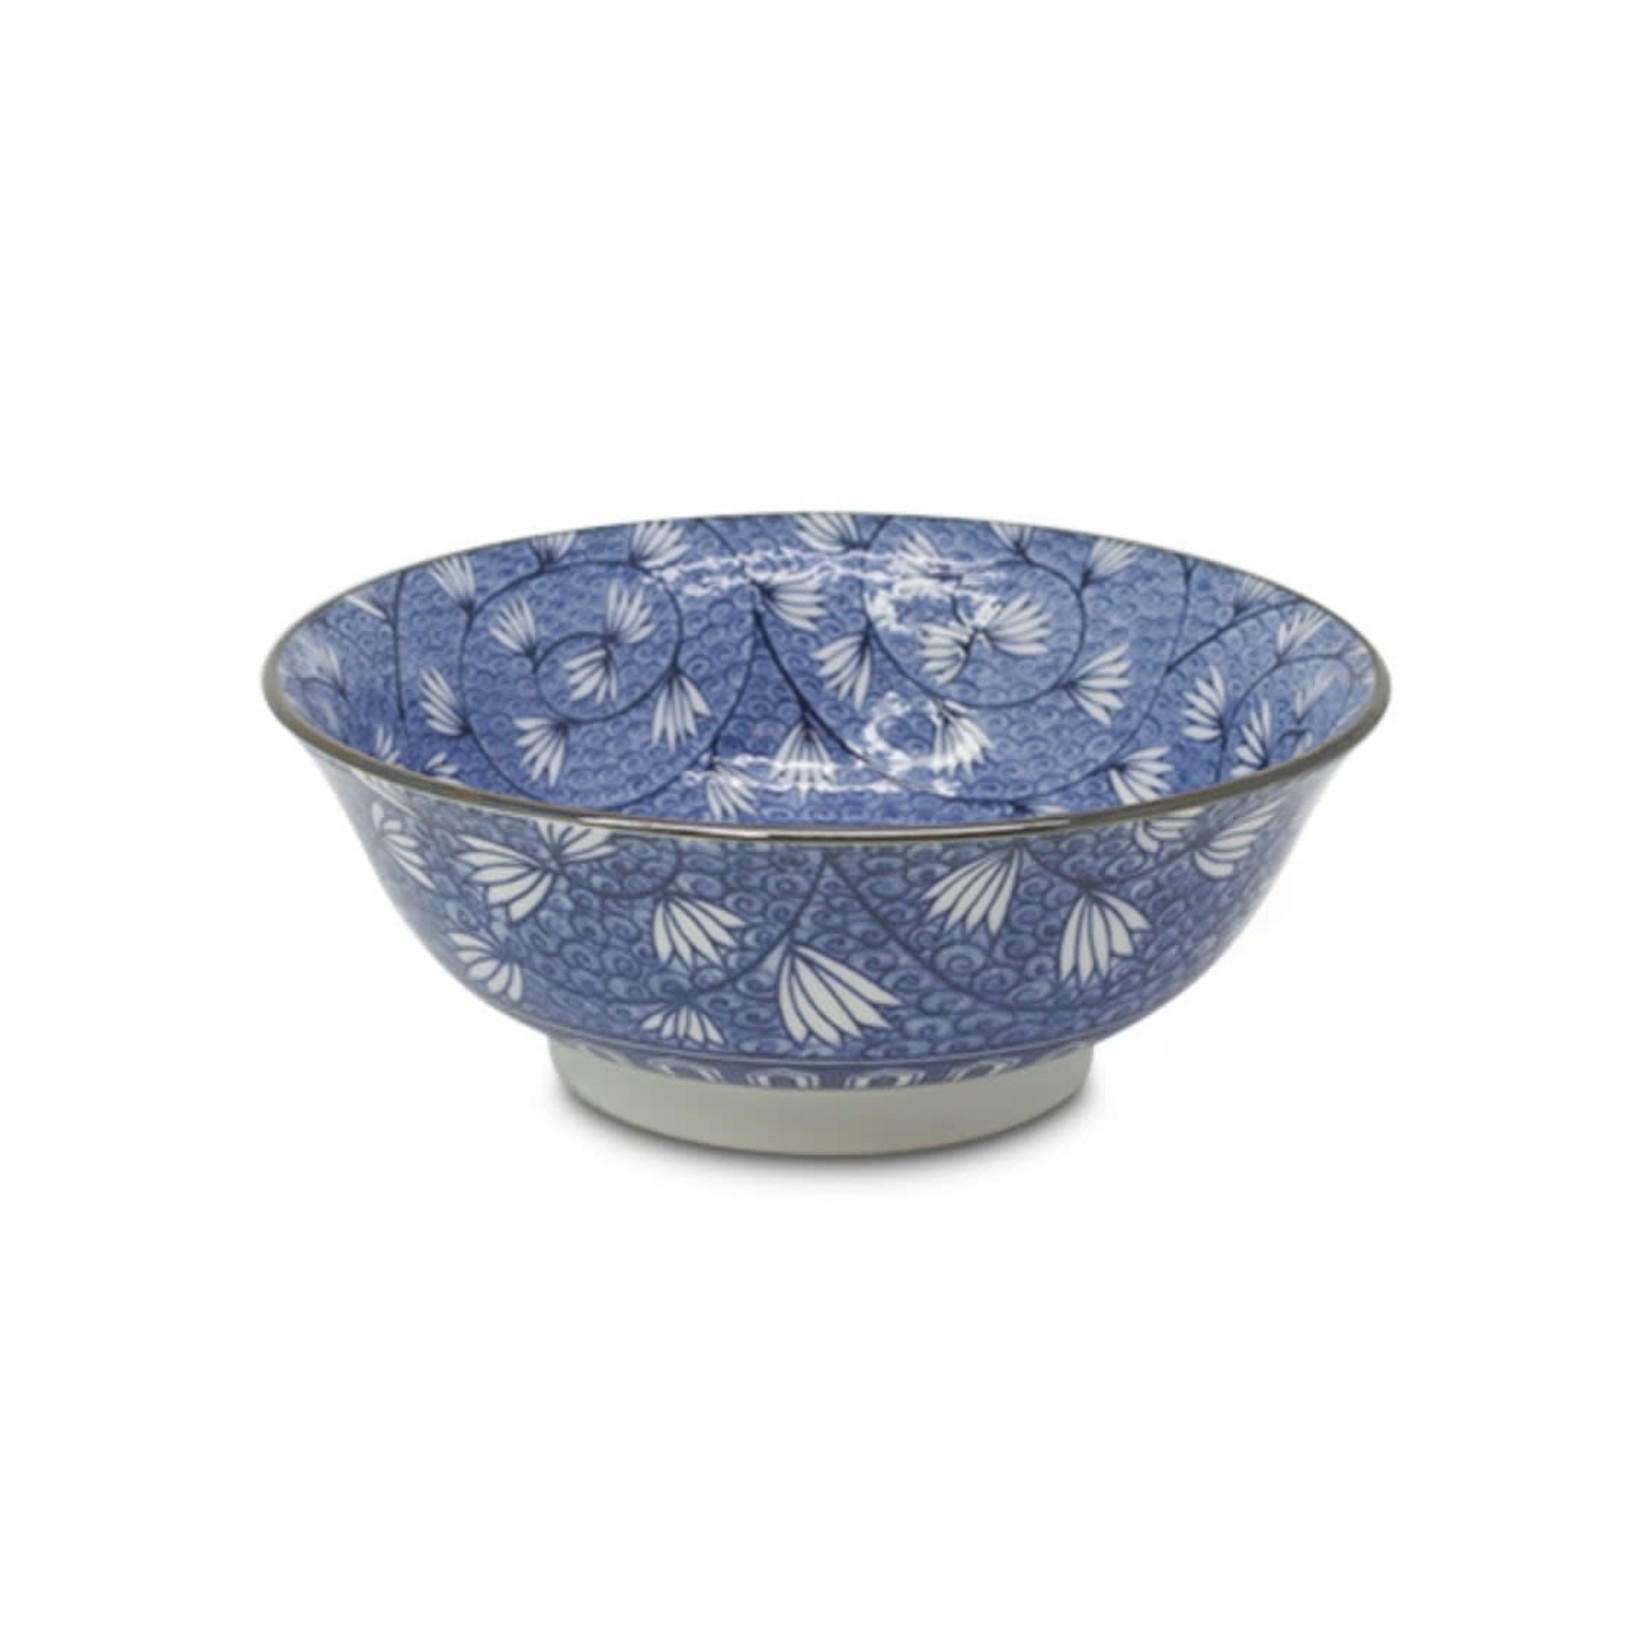 EMF EMF Ivy Arabesque Japanese Porcelain Bowl 8"